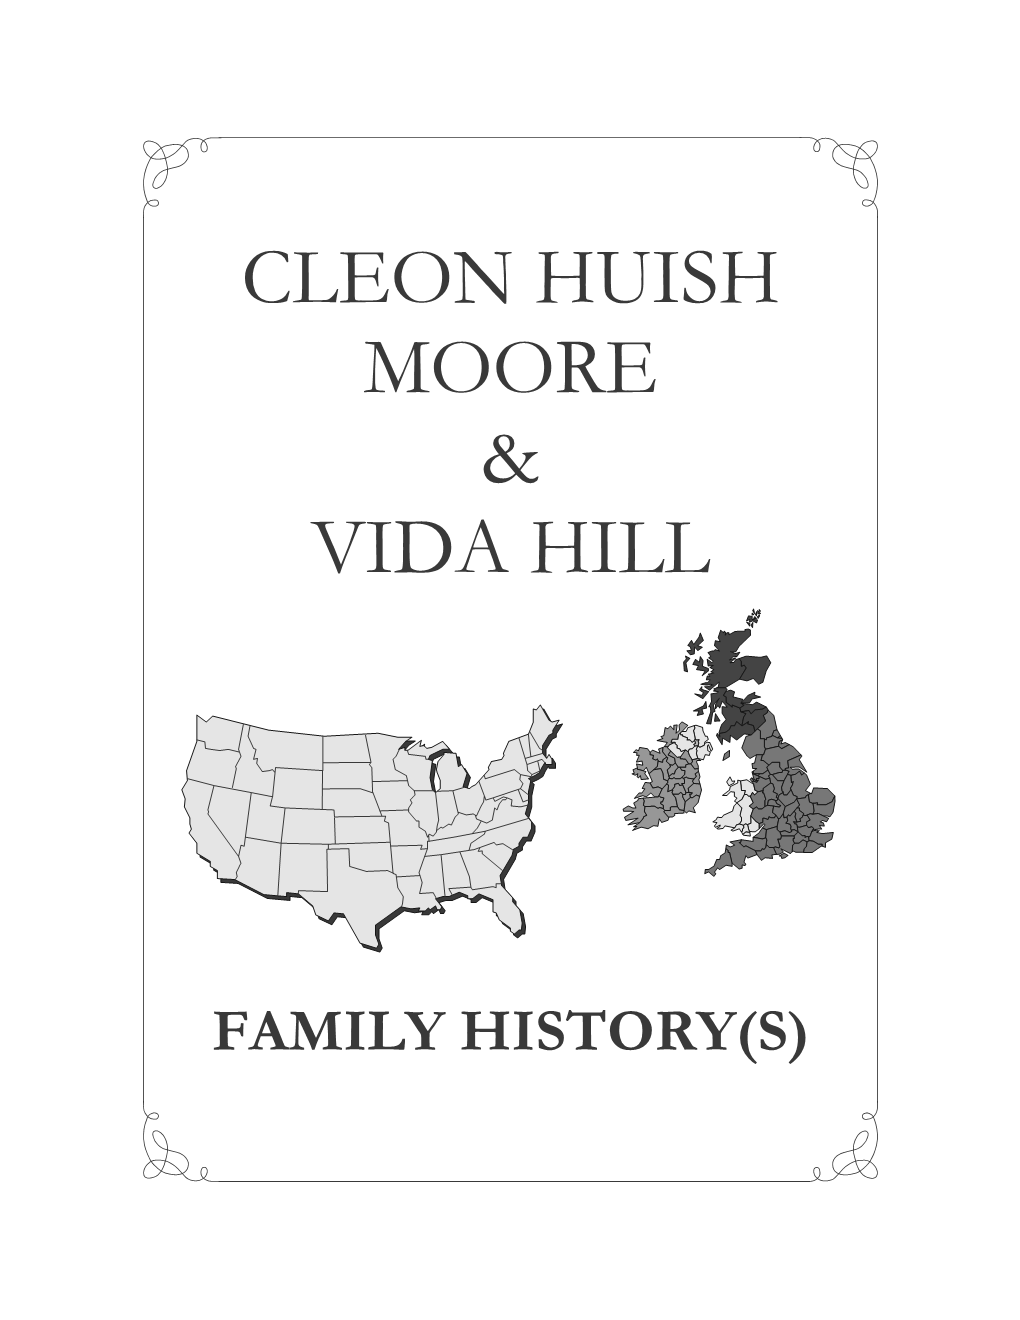 Cleon Huish Moore & Vida Hill